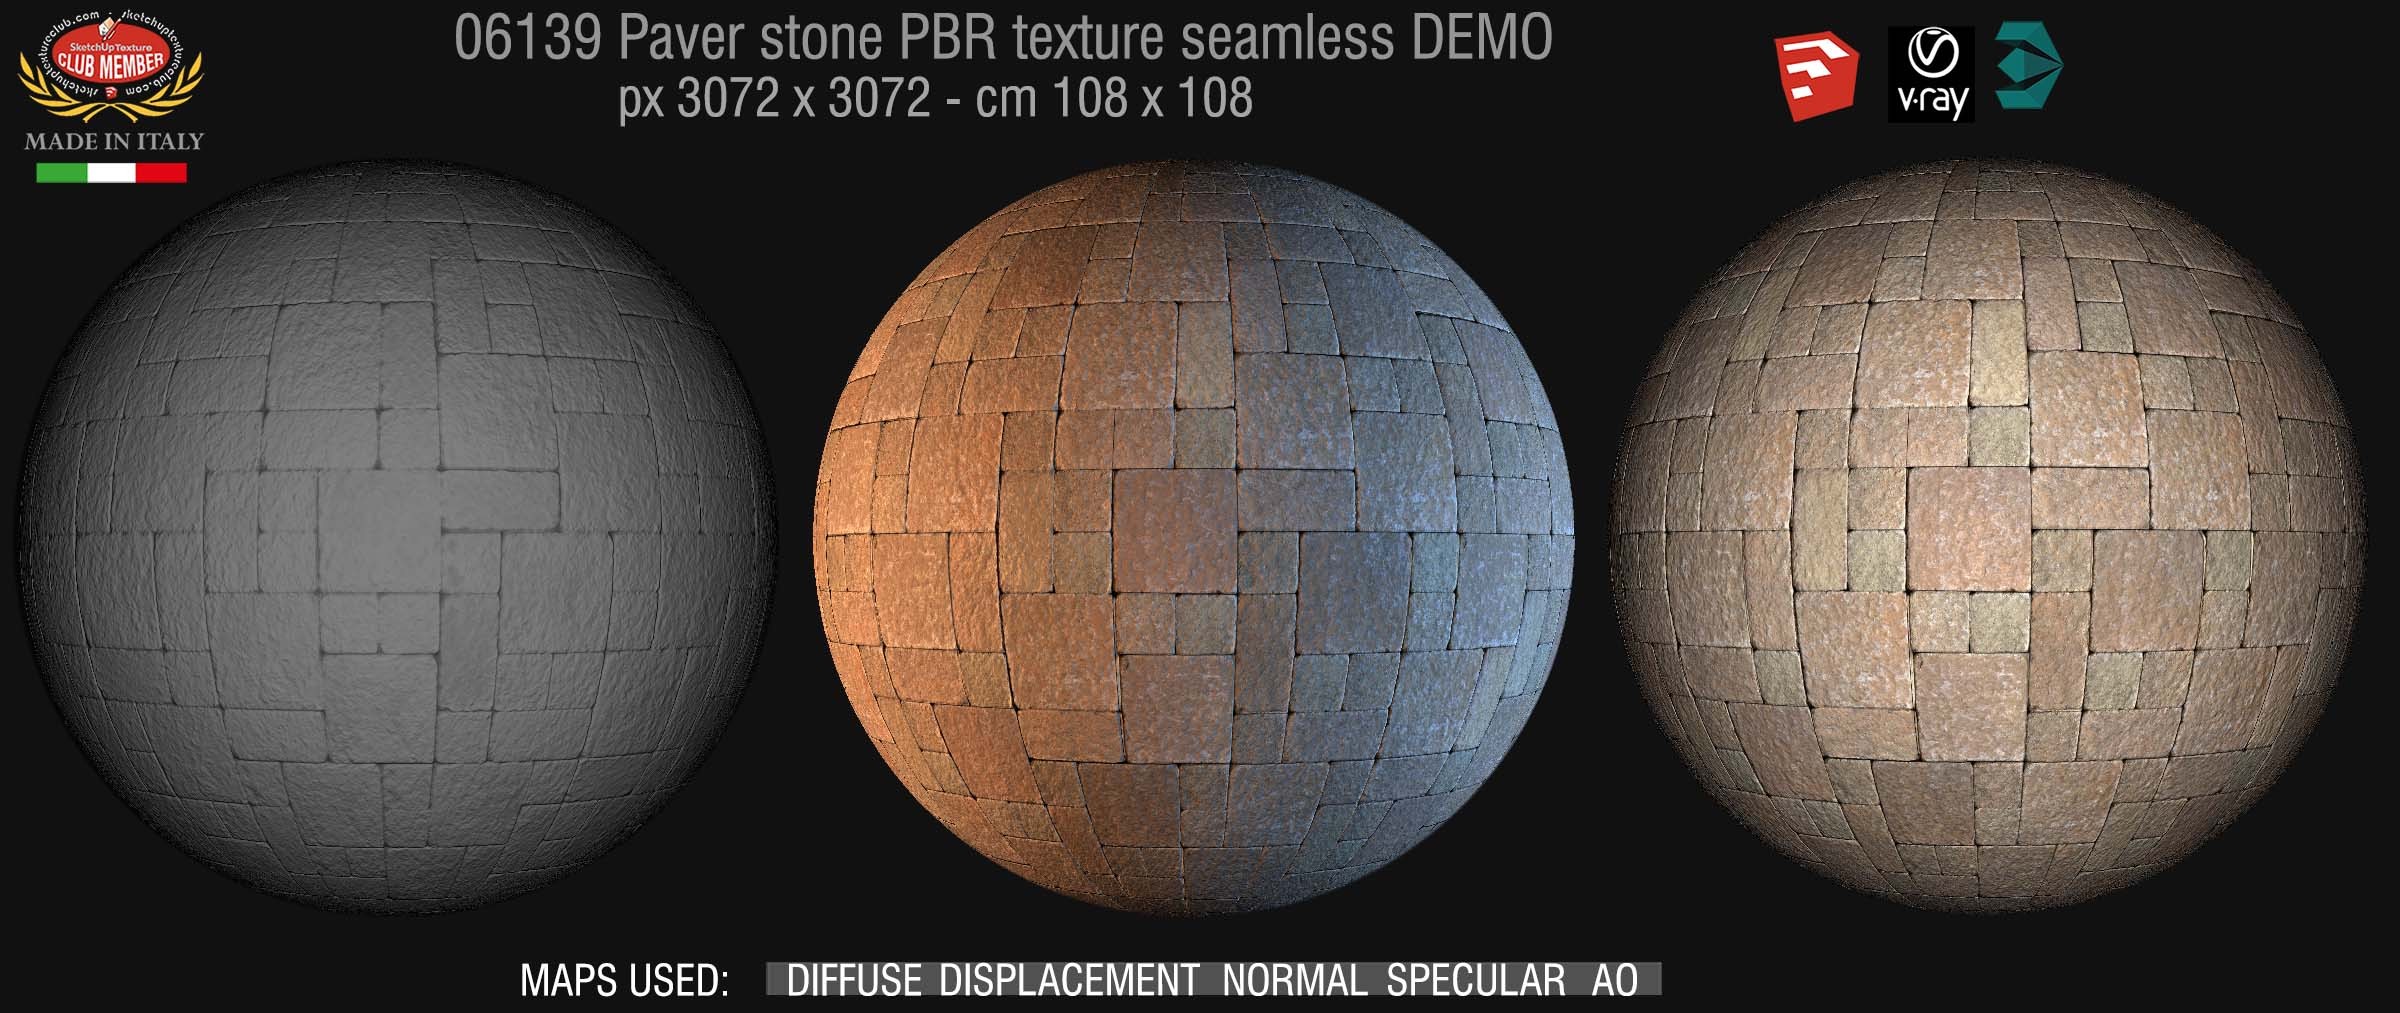 06139 paver stone PBR texture seamless DEMO